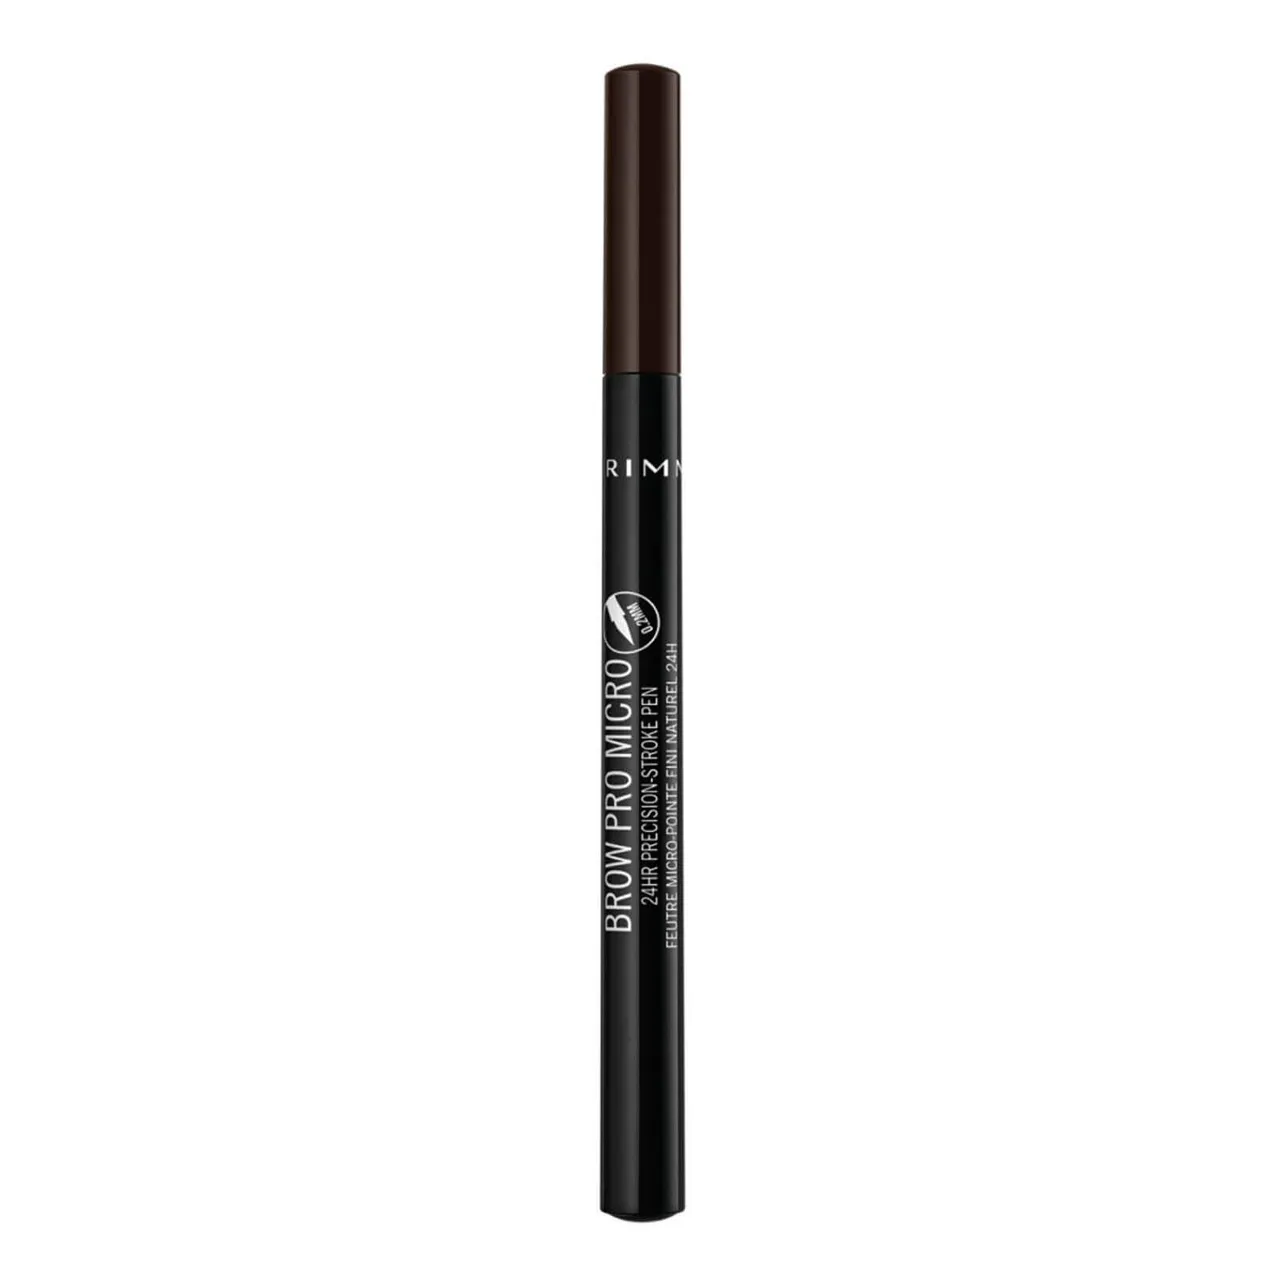 Rimmel Brow Pro Micro 24HR Precision-Stroke Pen 1ml (Various Shades) - 004 Dark Brown